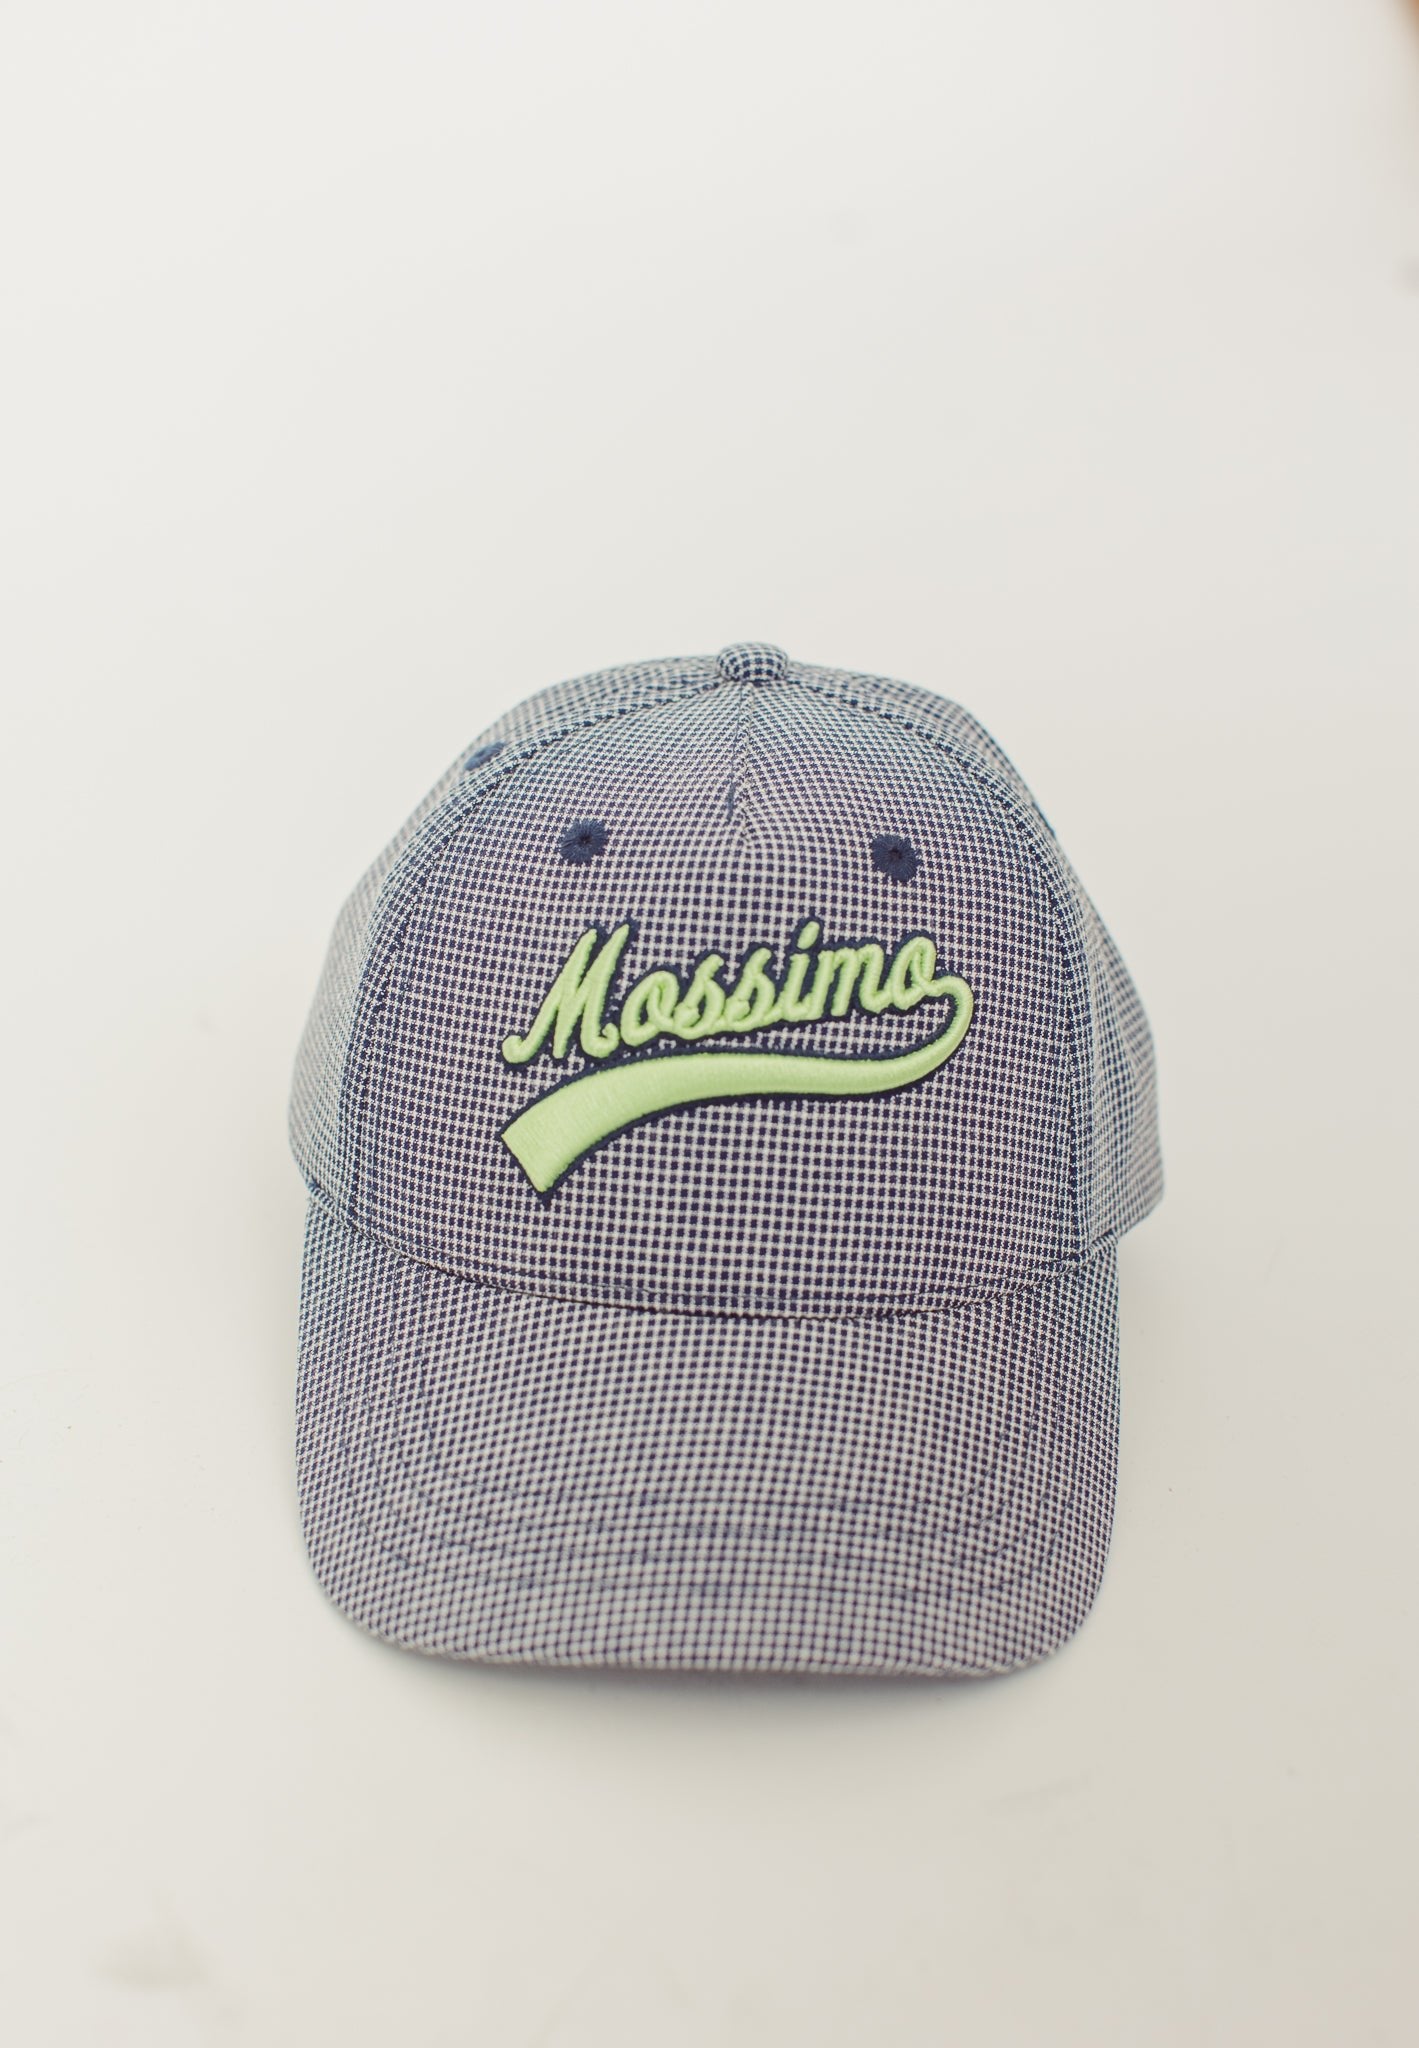 Mosskids Stripes Patterned Cotton Baseball Cap - Mossimo PH